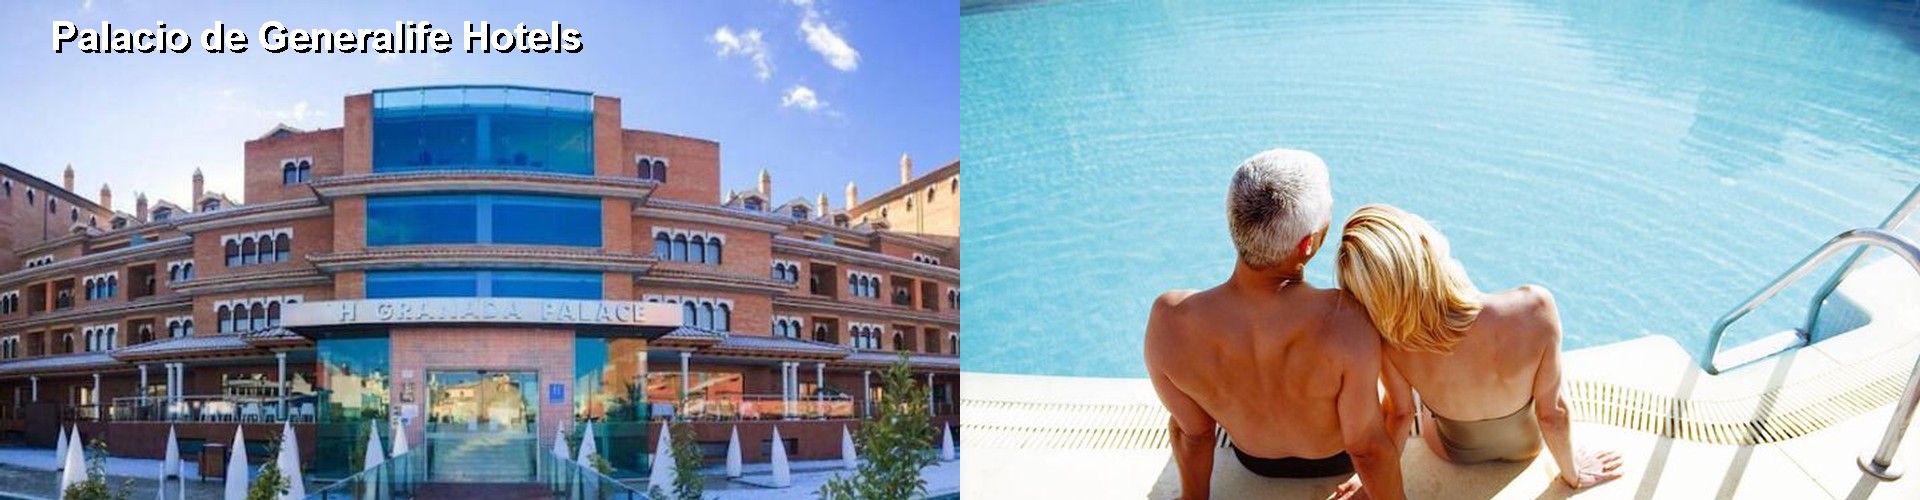 5 Best Hotels near Palacio de Generalife